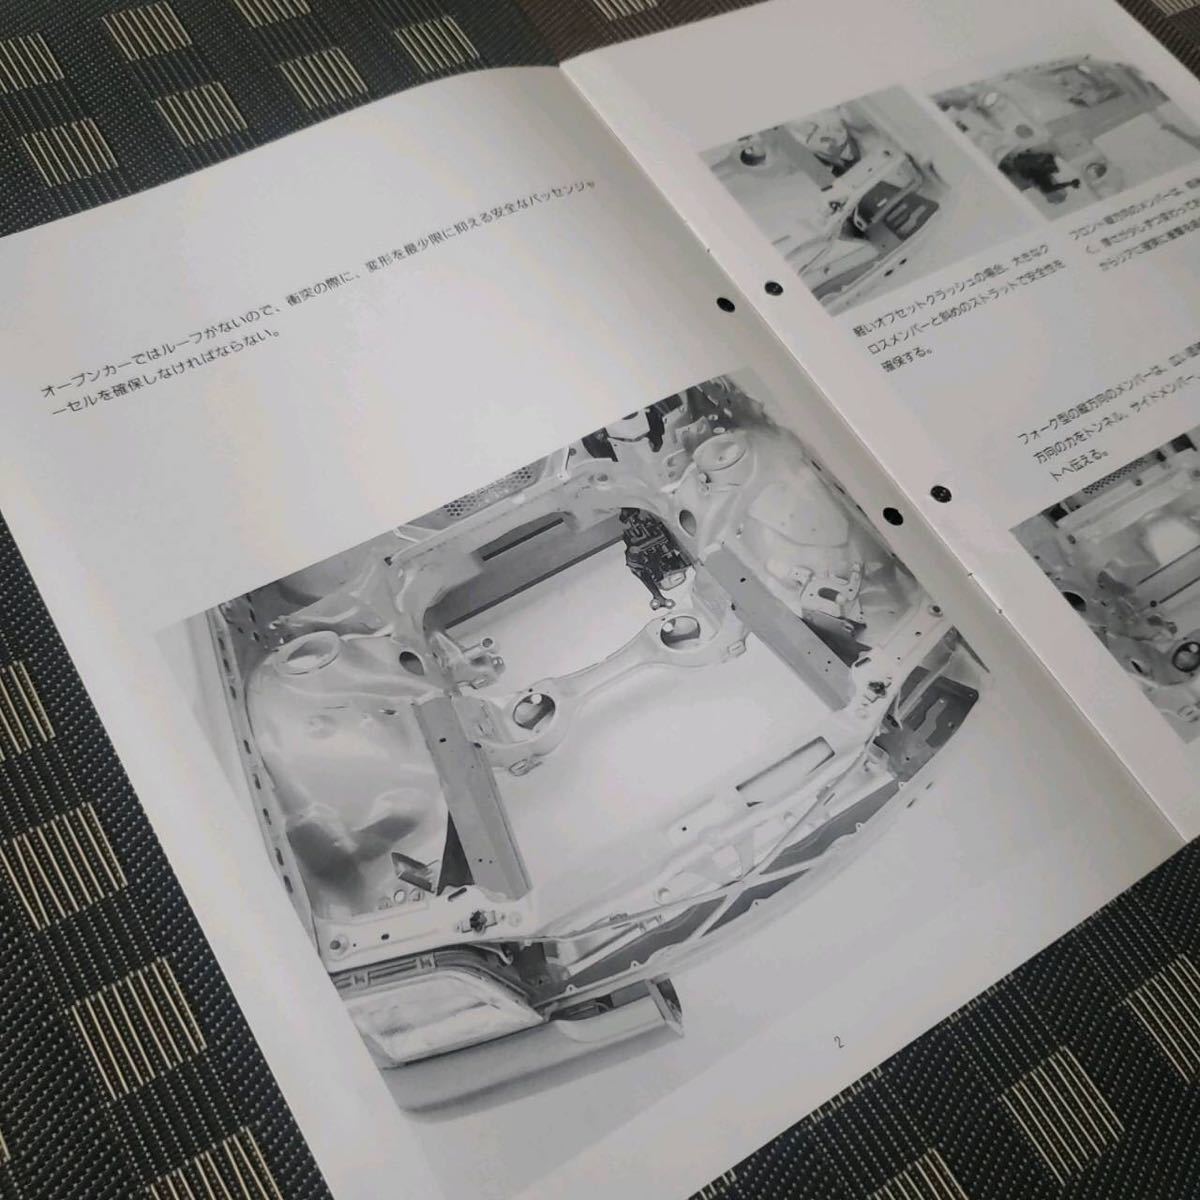  Benz R129 that time thing sales manual?3 part set 300SL320SL500SL600SL service manual catalog pamphlet Lee fret 